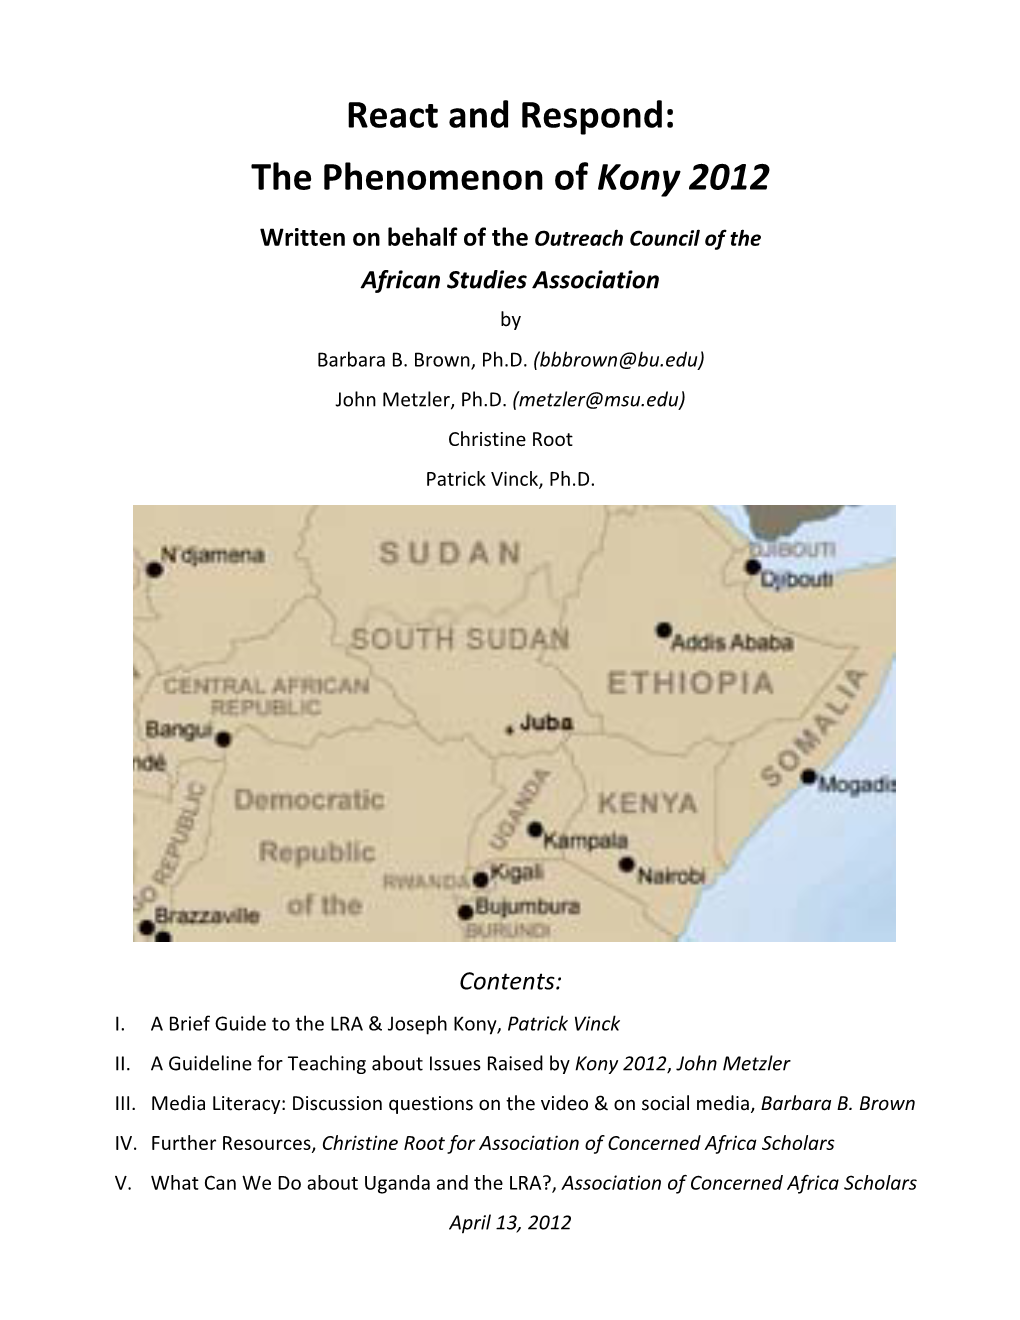 React and Respond: the Phenomenon of Kony 2012